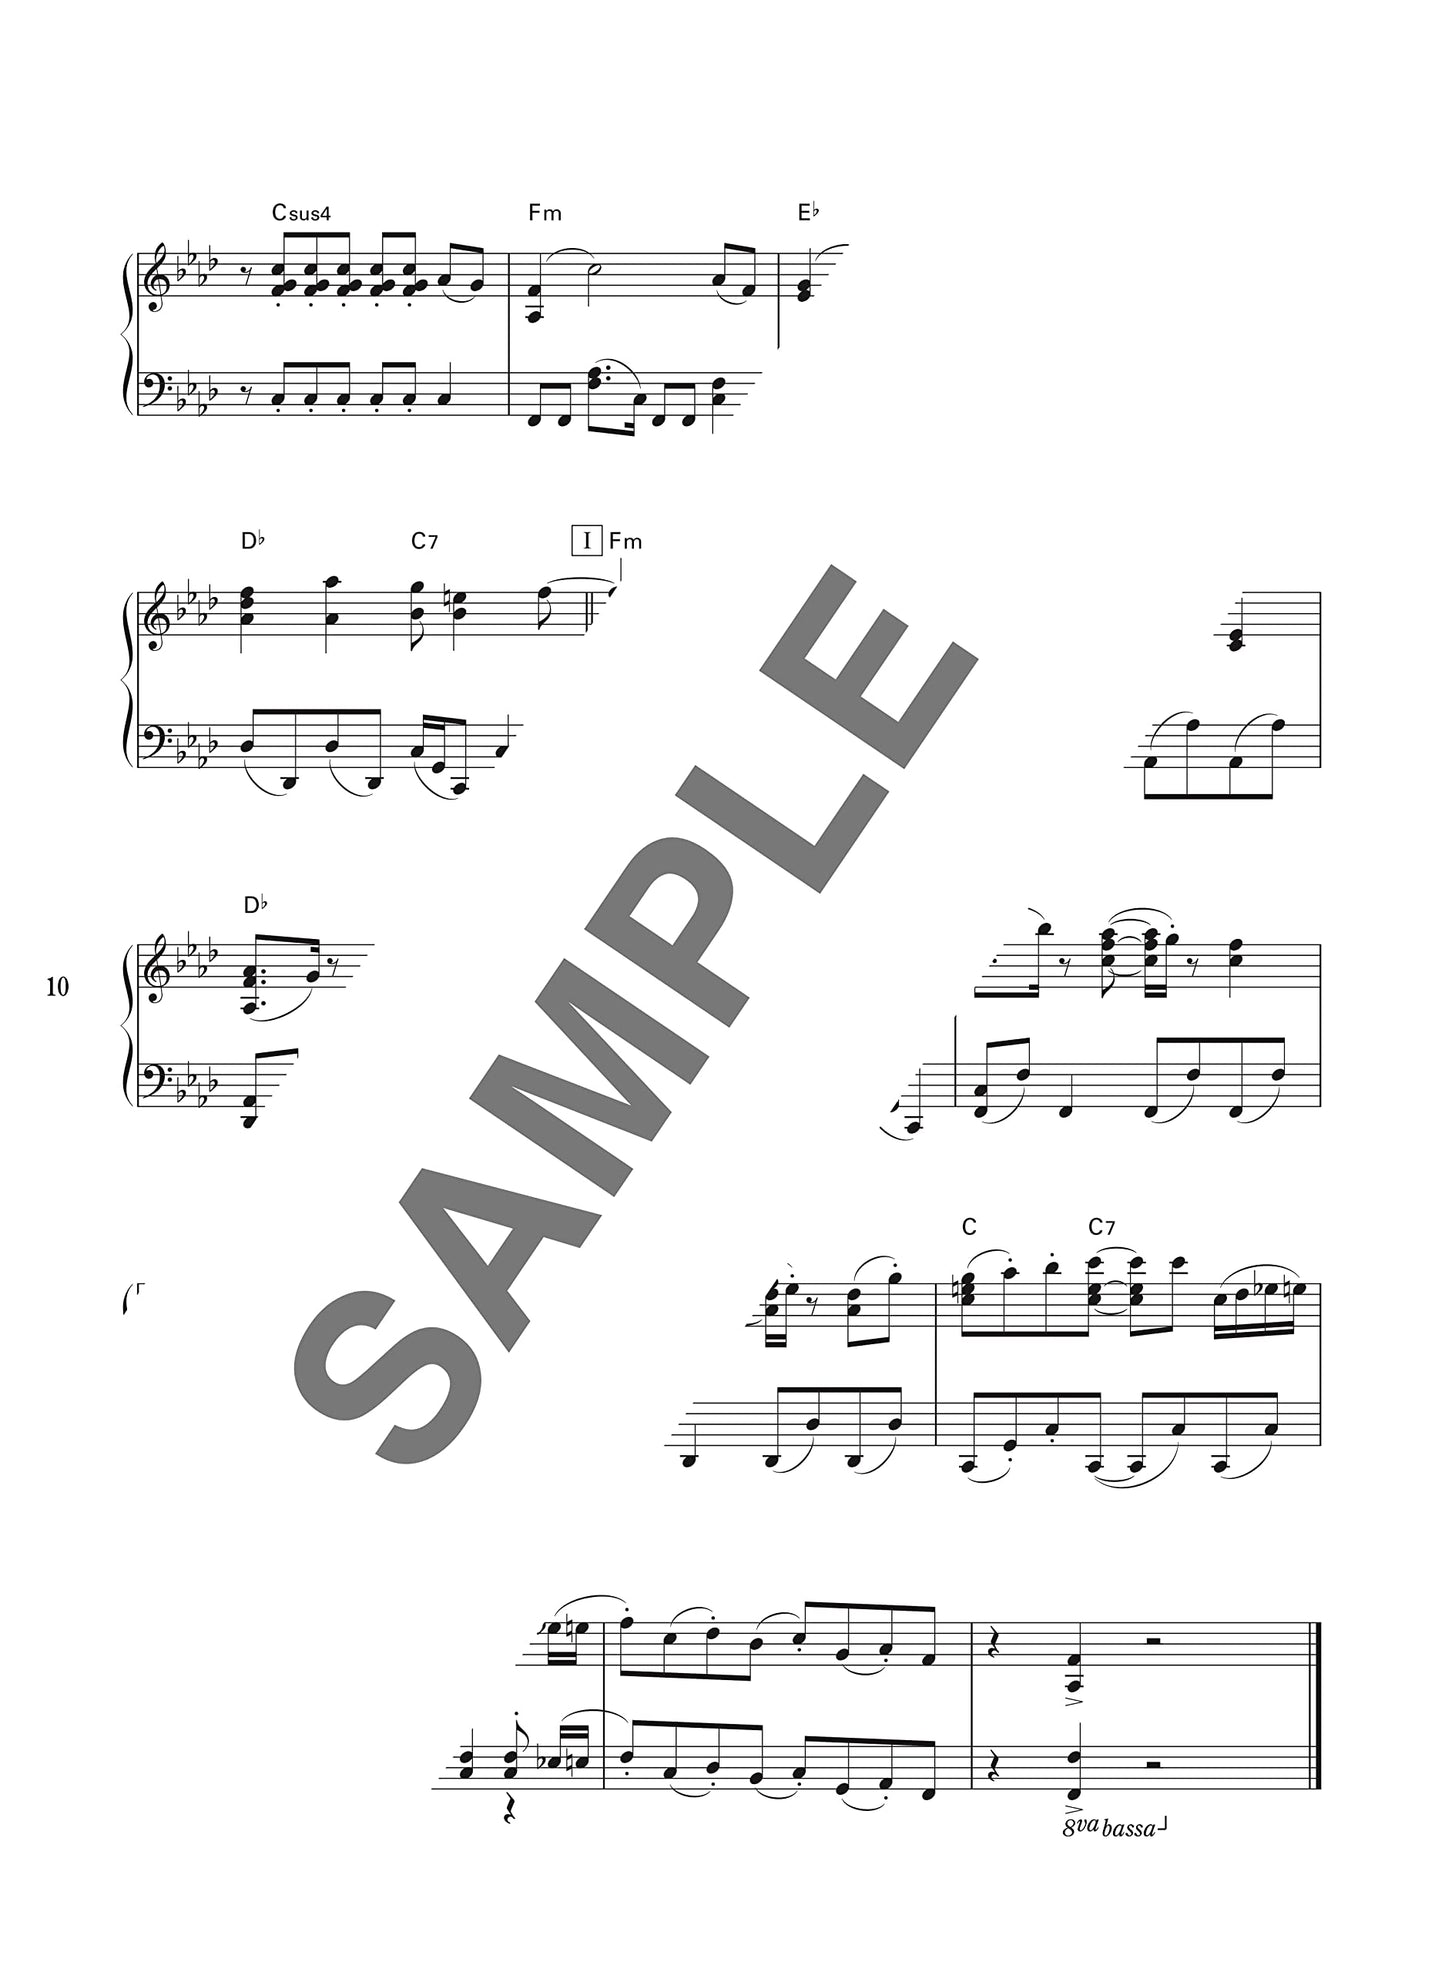 Detective Conan(TV Anime) BGM Selection for Piano Solo(Intermediate) Sheet Music Book